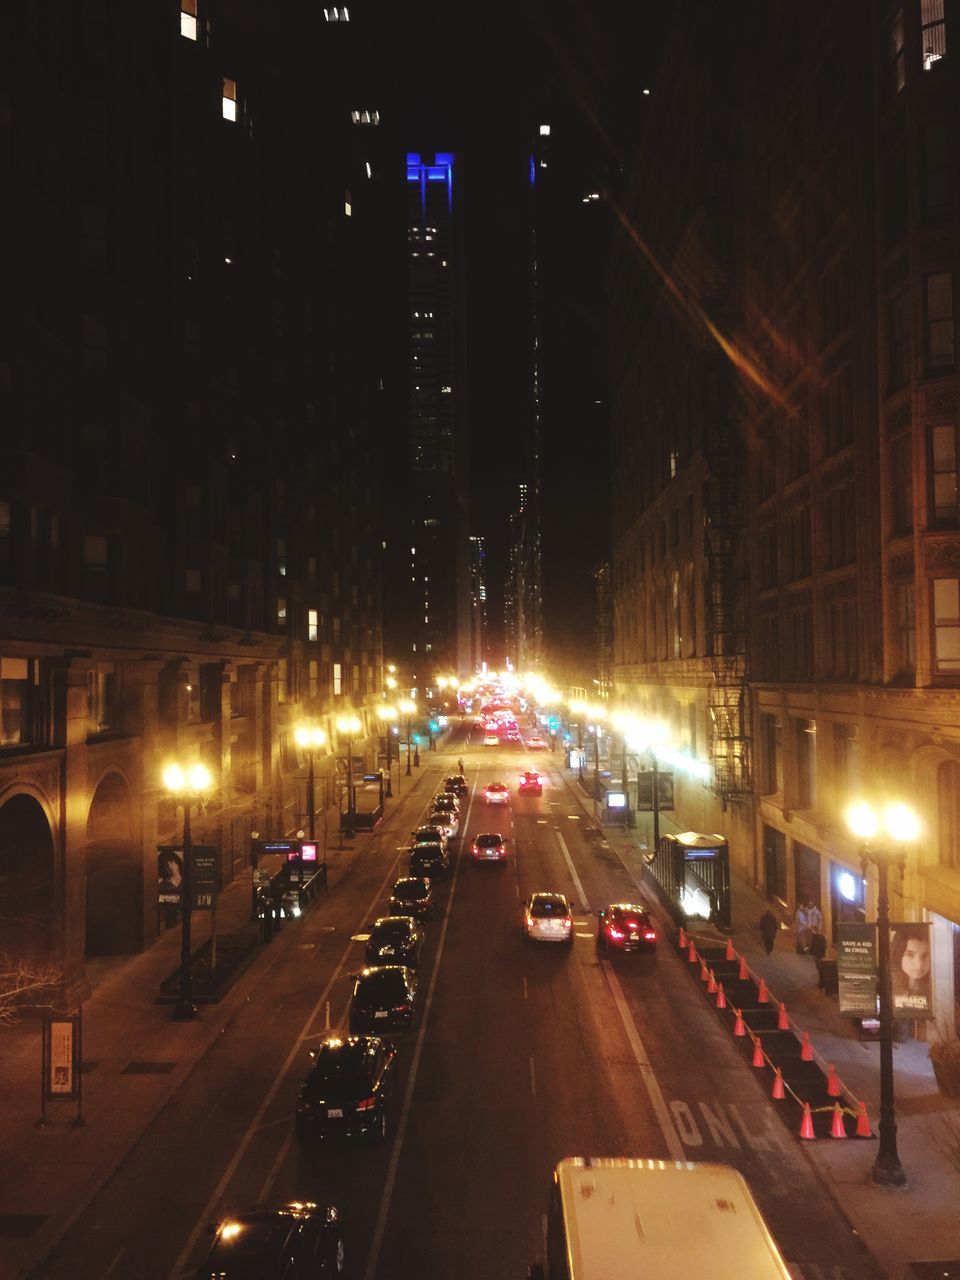 TRAFFIC ON CITY STREET AT NIGHT